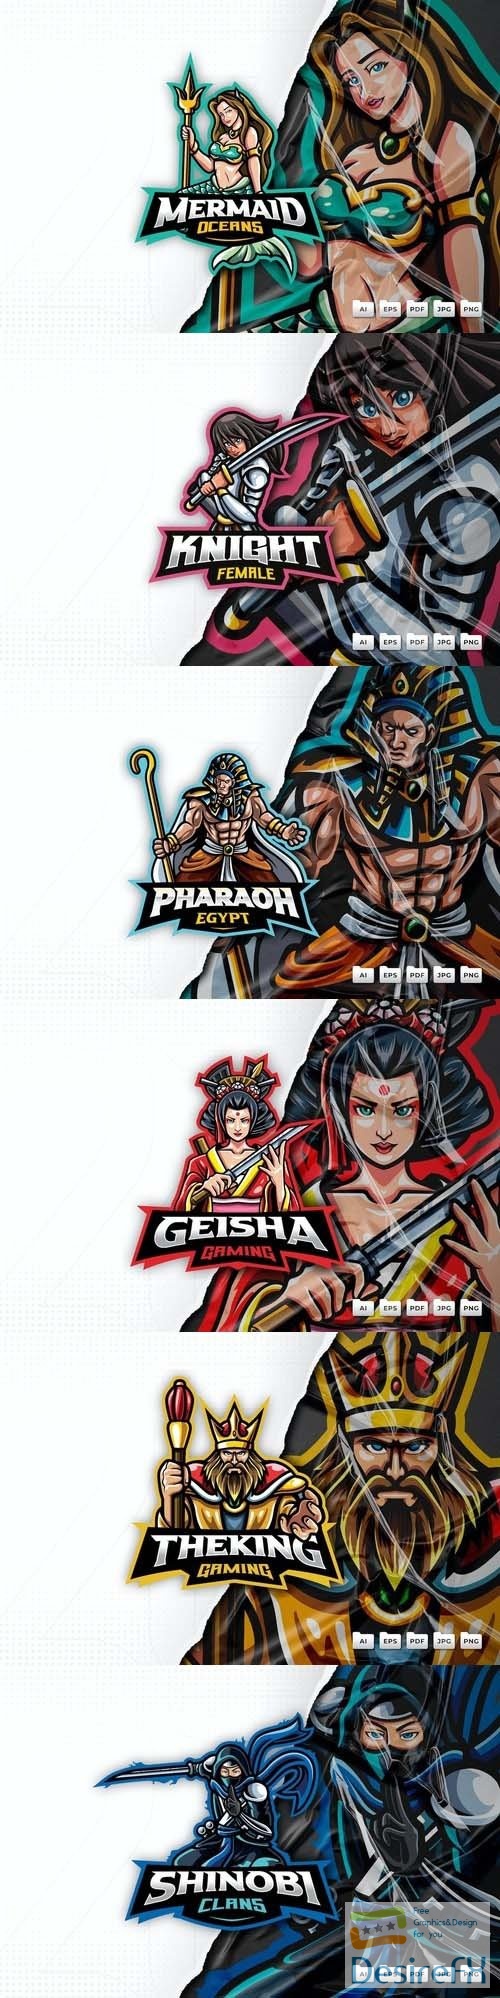 King, shinobi, pharaoh, mermaid, geisha, female knight, mascot logo design